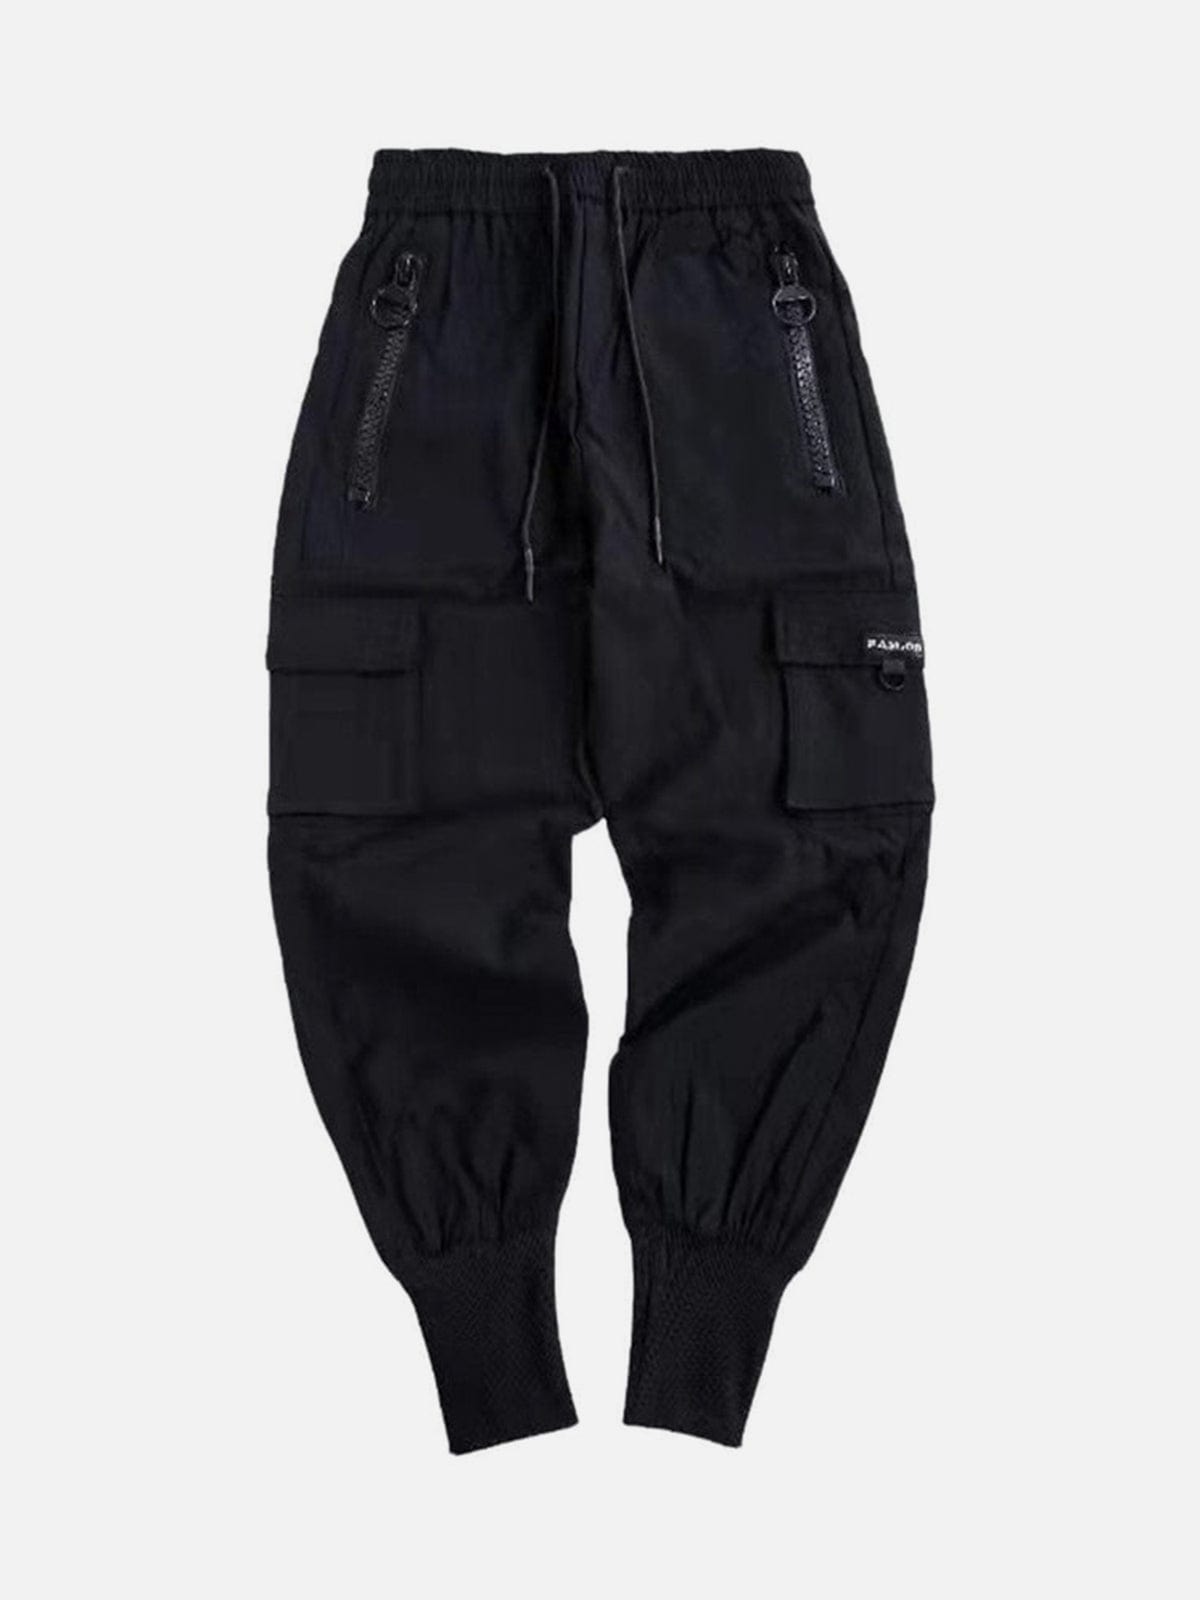 Multi Pockets Drawstring Zipper Pants Streetwear Brand Techwear Combat Tactical YUGEN THEORY